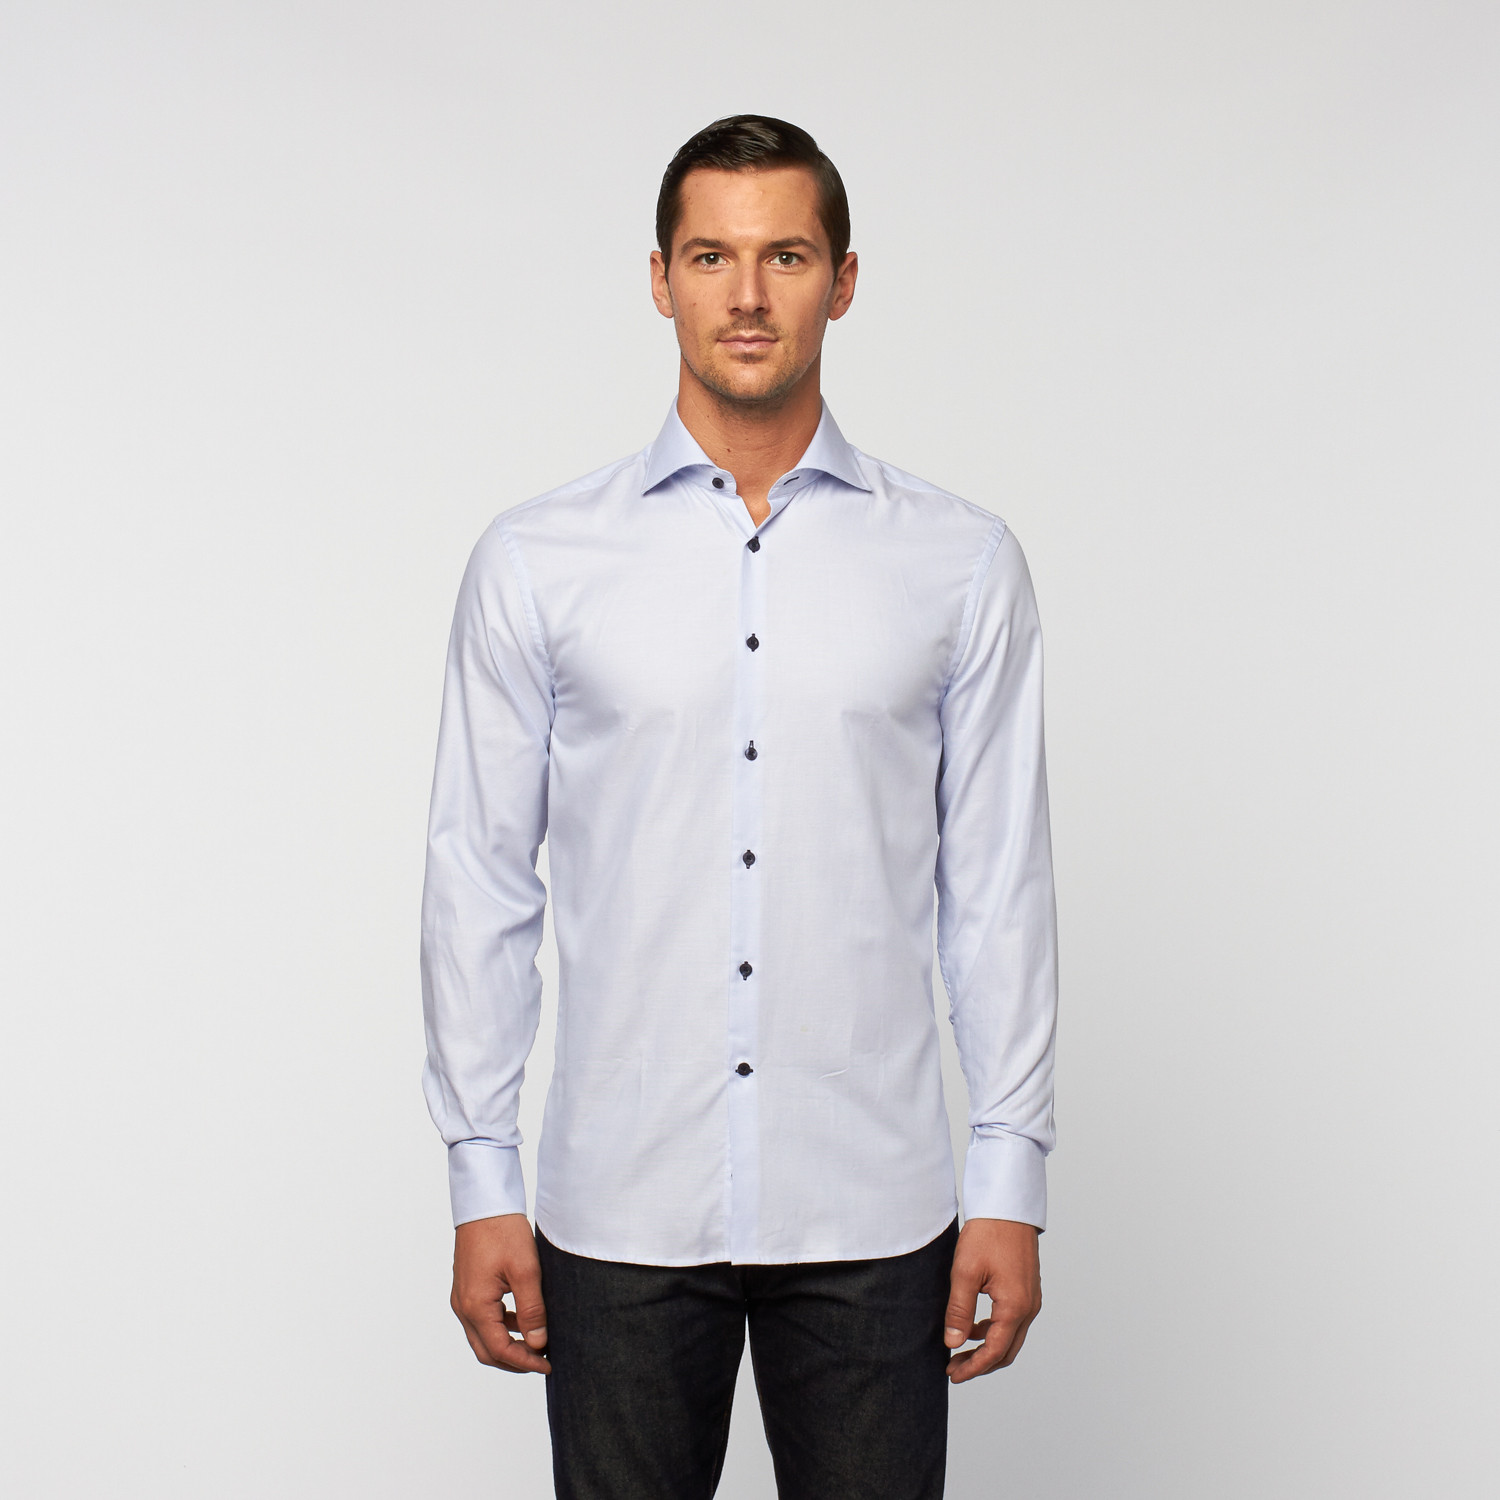 UNANYME Button Up Dress Shirt // Light Blue Microstripe (S) - Georges ...